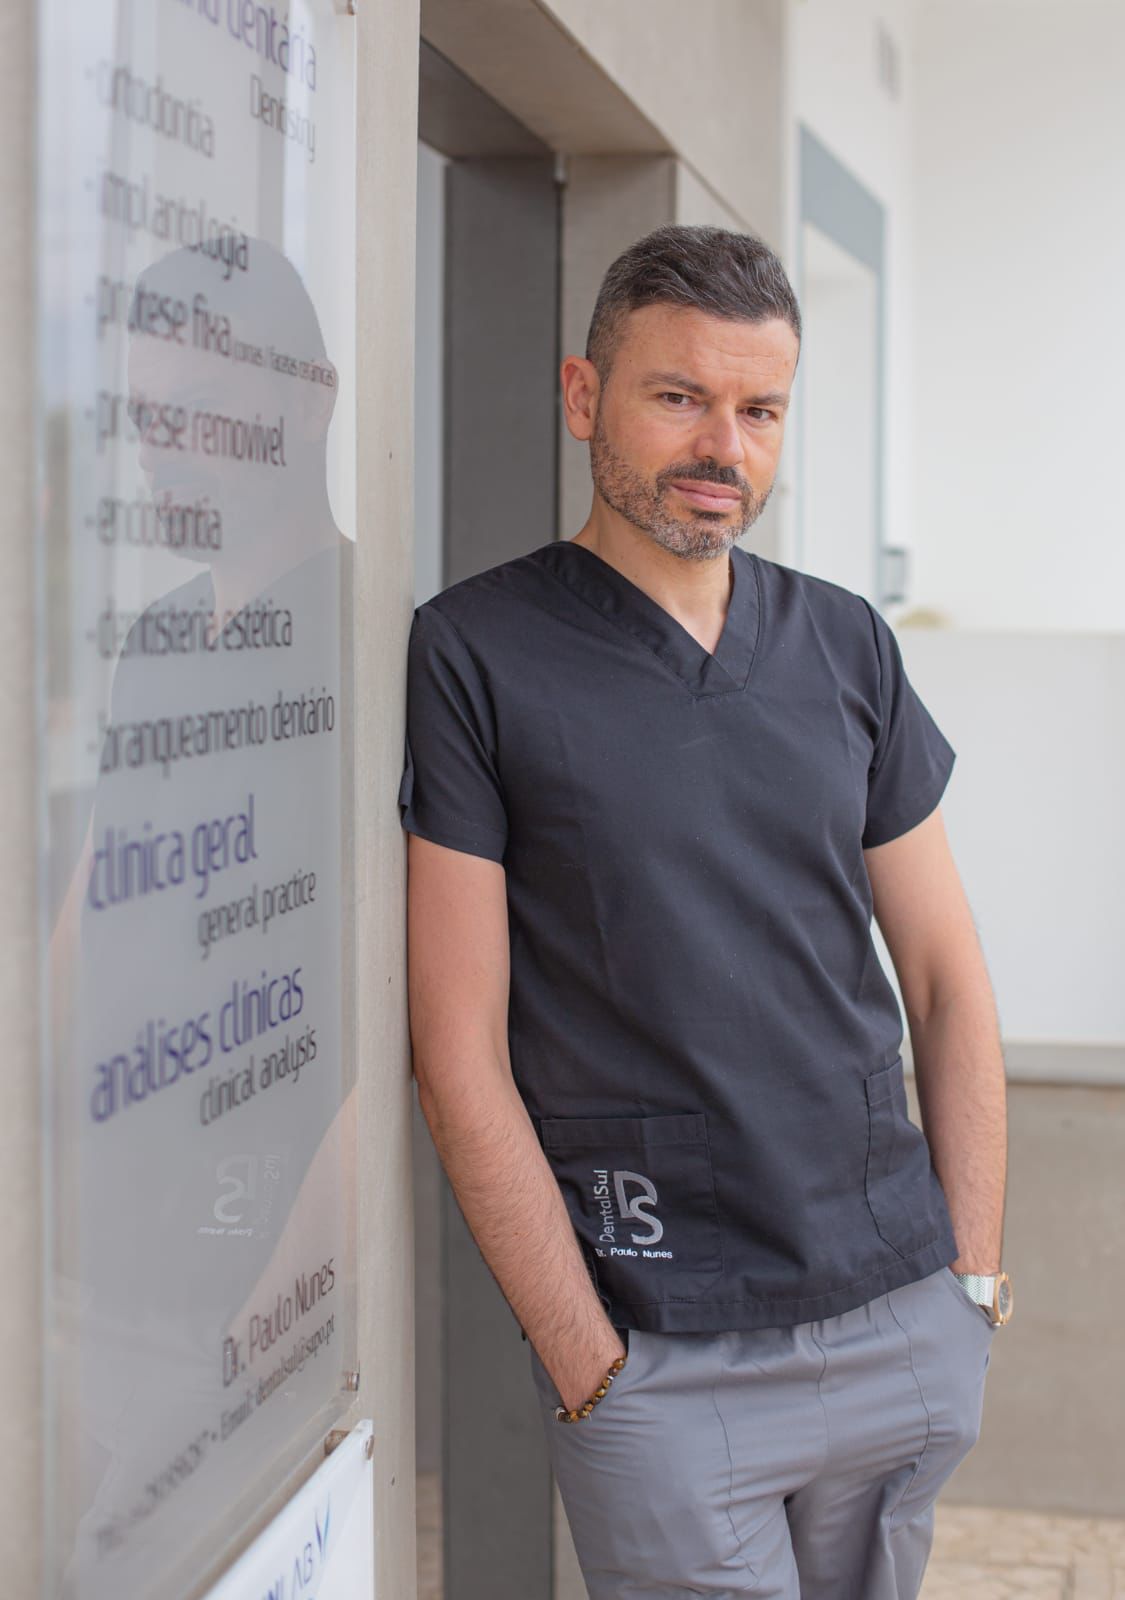 Dr. Paulo Nunes